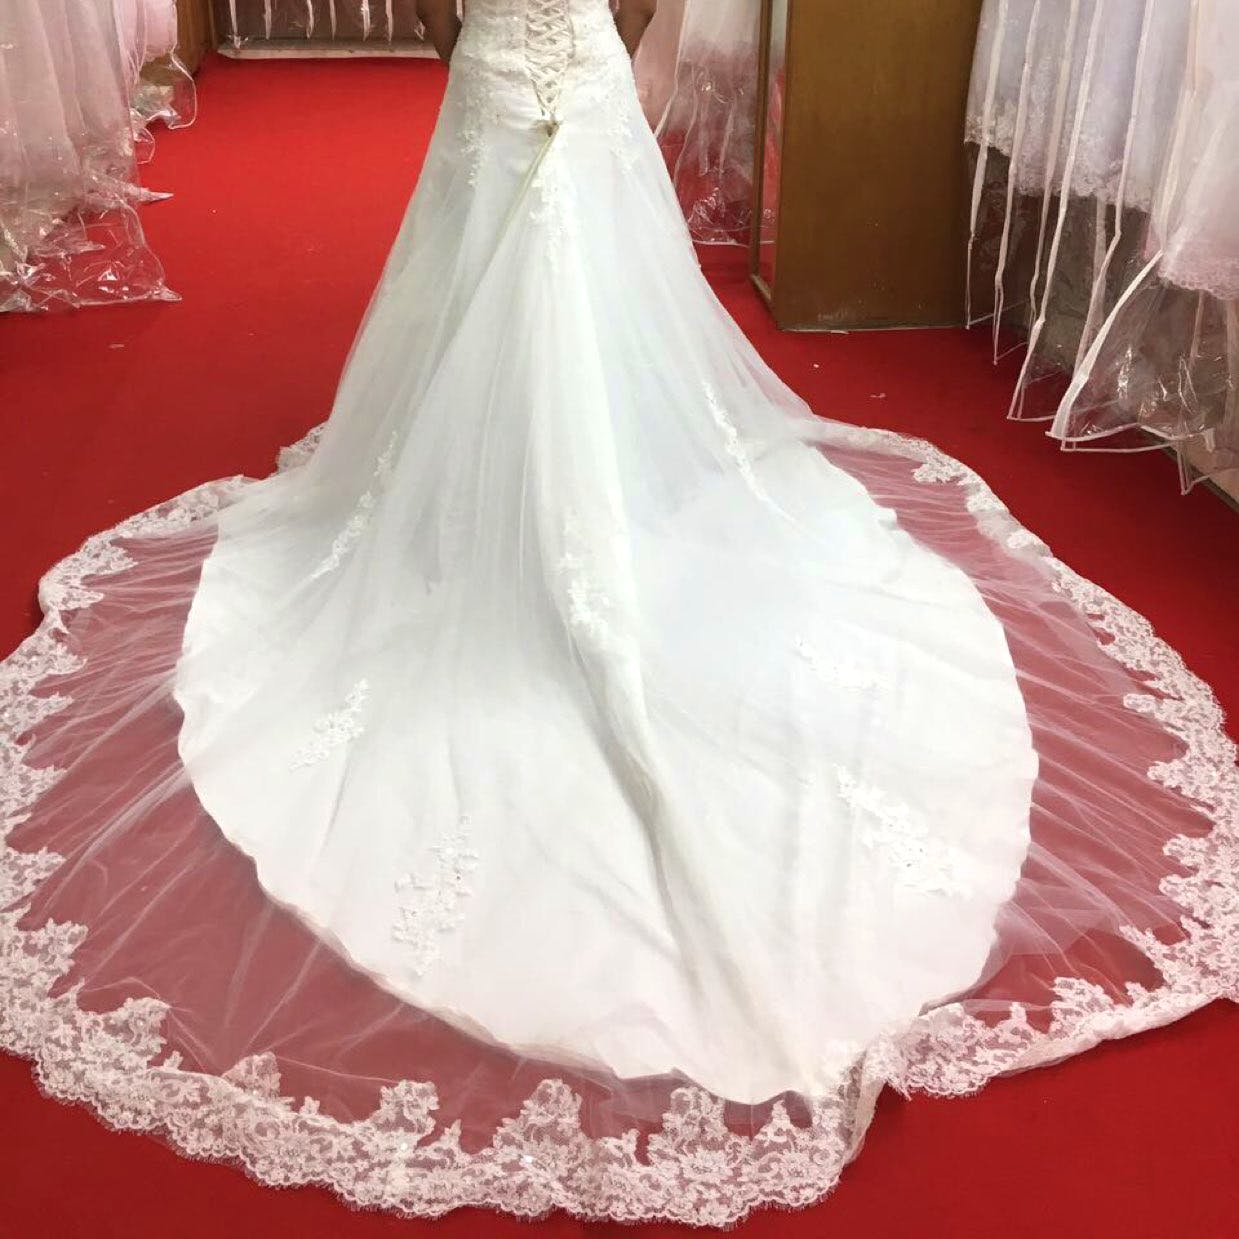 Dress,Clothing,Bridal accessory,Bridal party dress,Wedding dress,Gown,Bridal clothing,Shoulder,Veil,Flooring